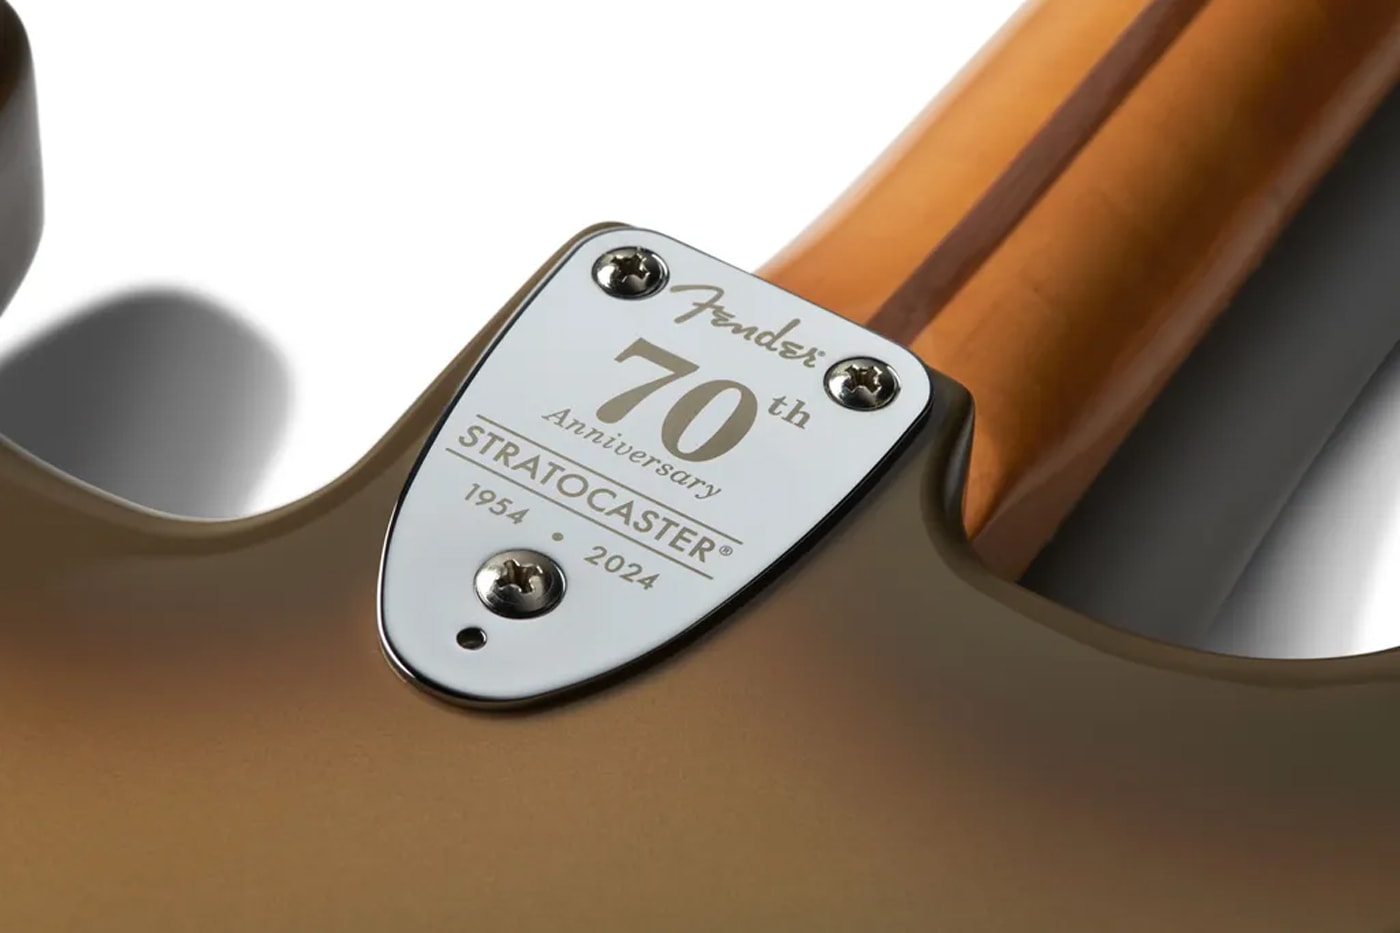 Fender 70th Anniversary Stratocaster Release Info